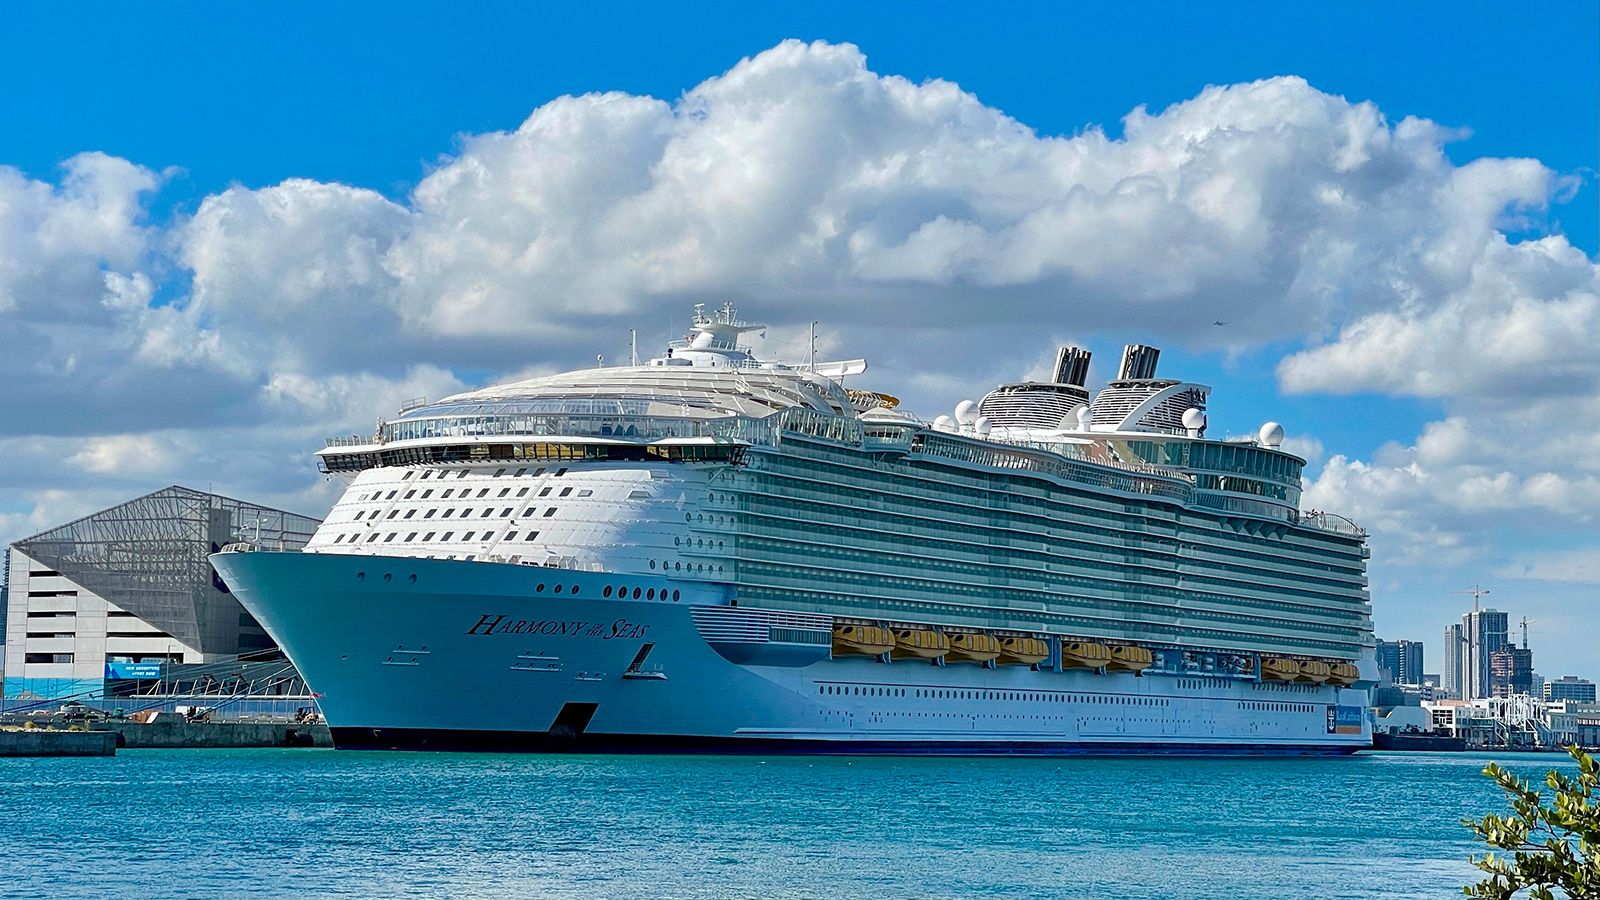 Man arrested for placing hidden camera in Royal Caribbean Cruise ship’s public bathroom: FBI